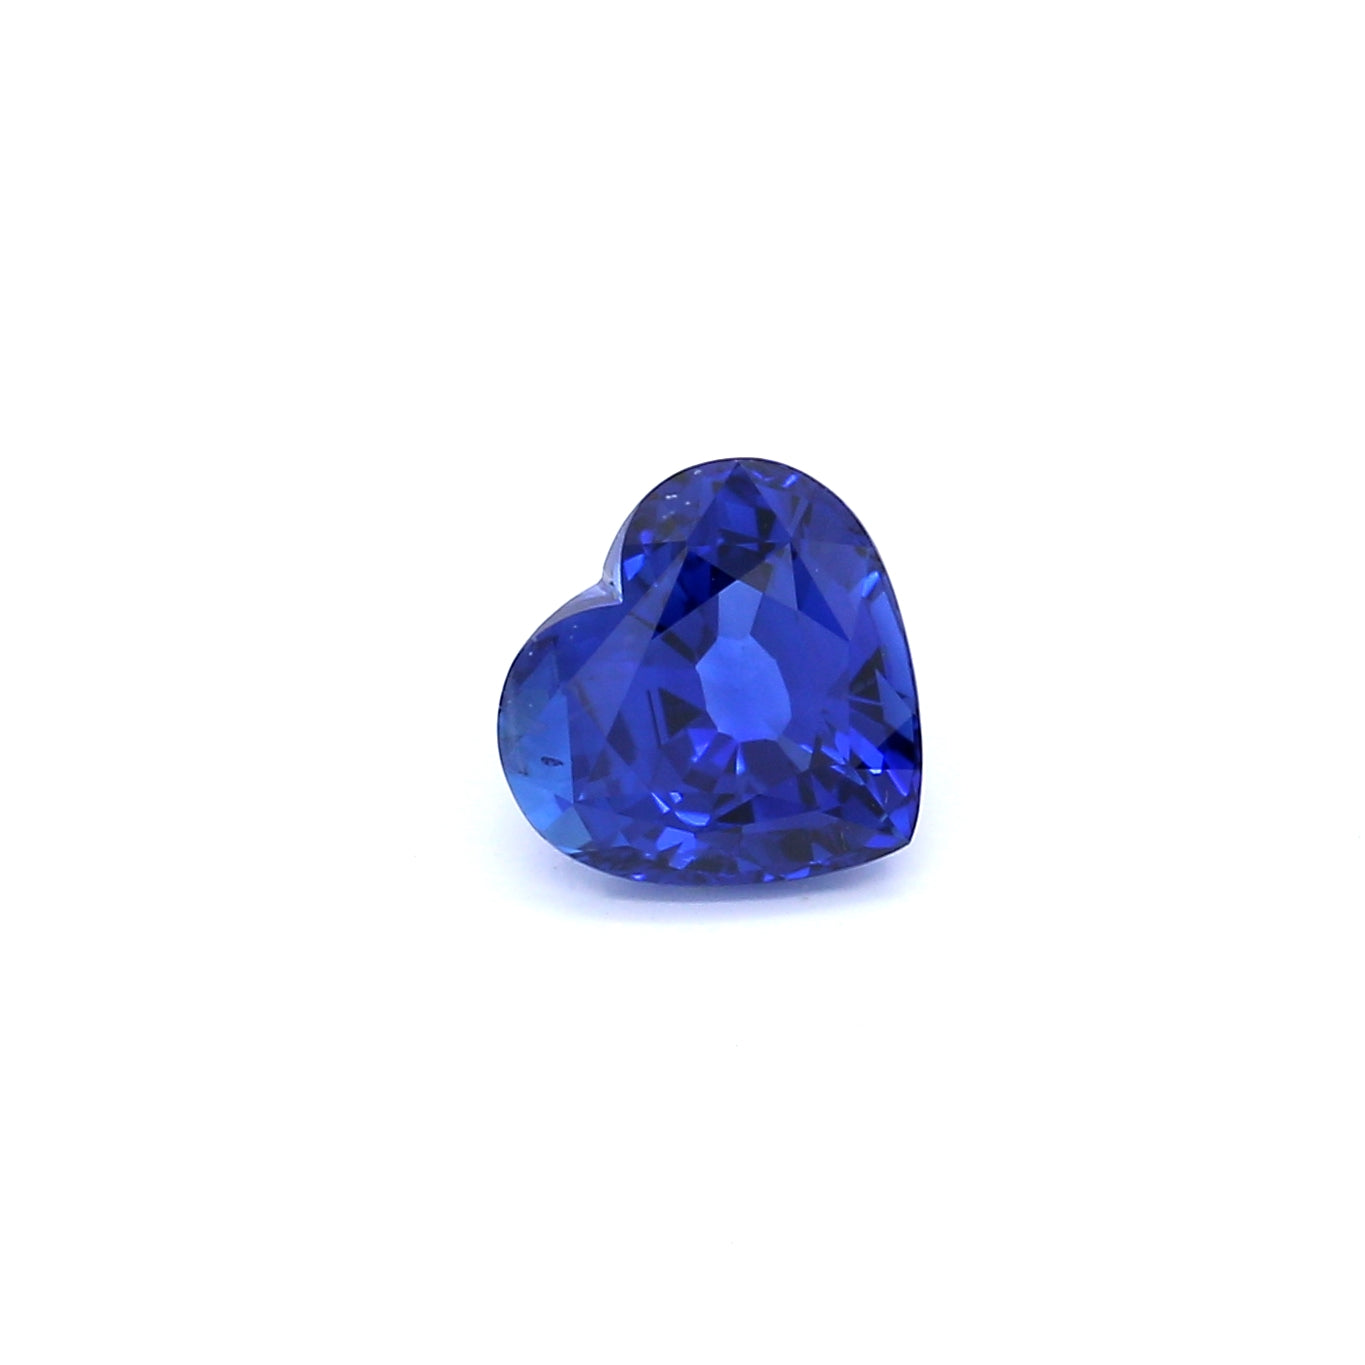 1.87ct Heart Shape Sapphire, Heated, Madagascar - 7.23 x 7.62 x 4.40mm